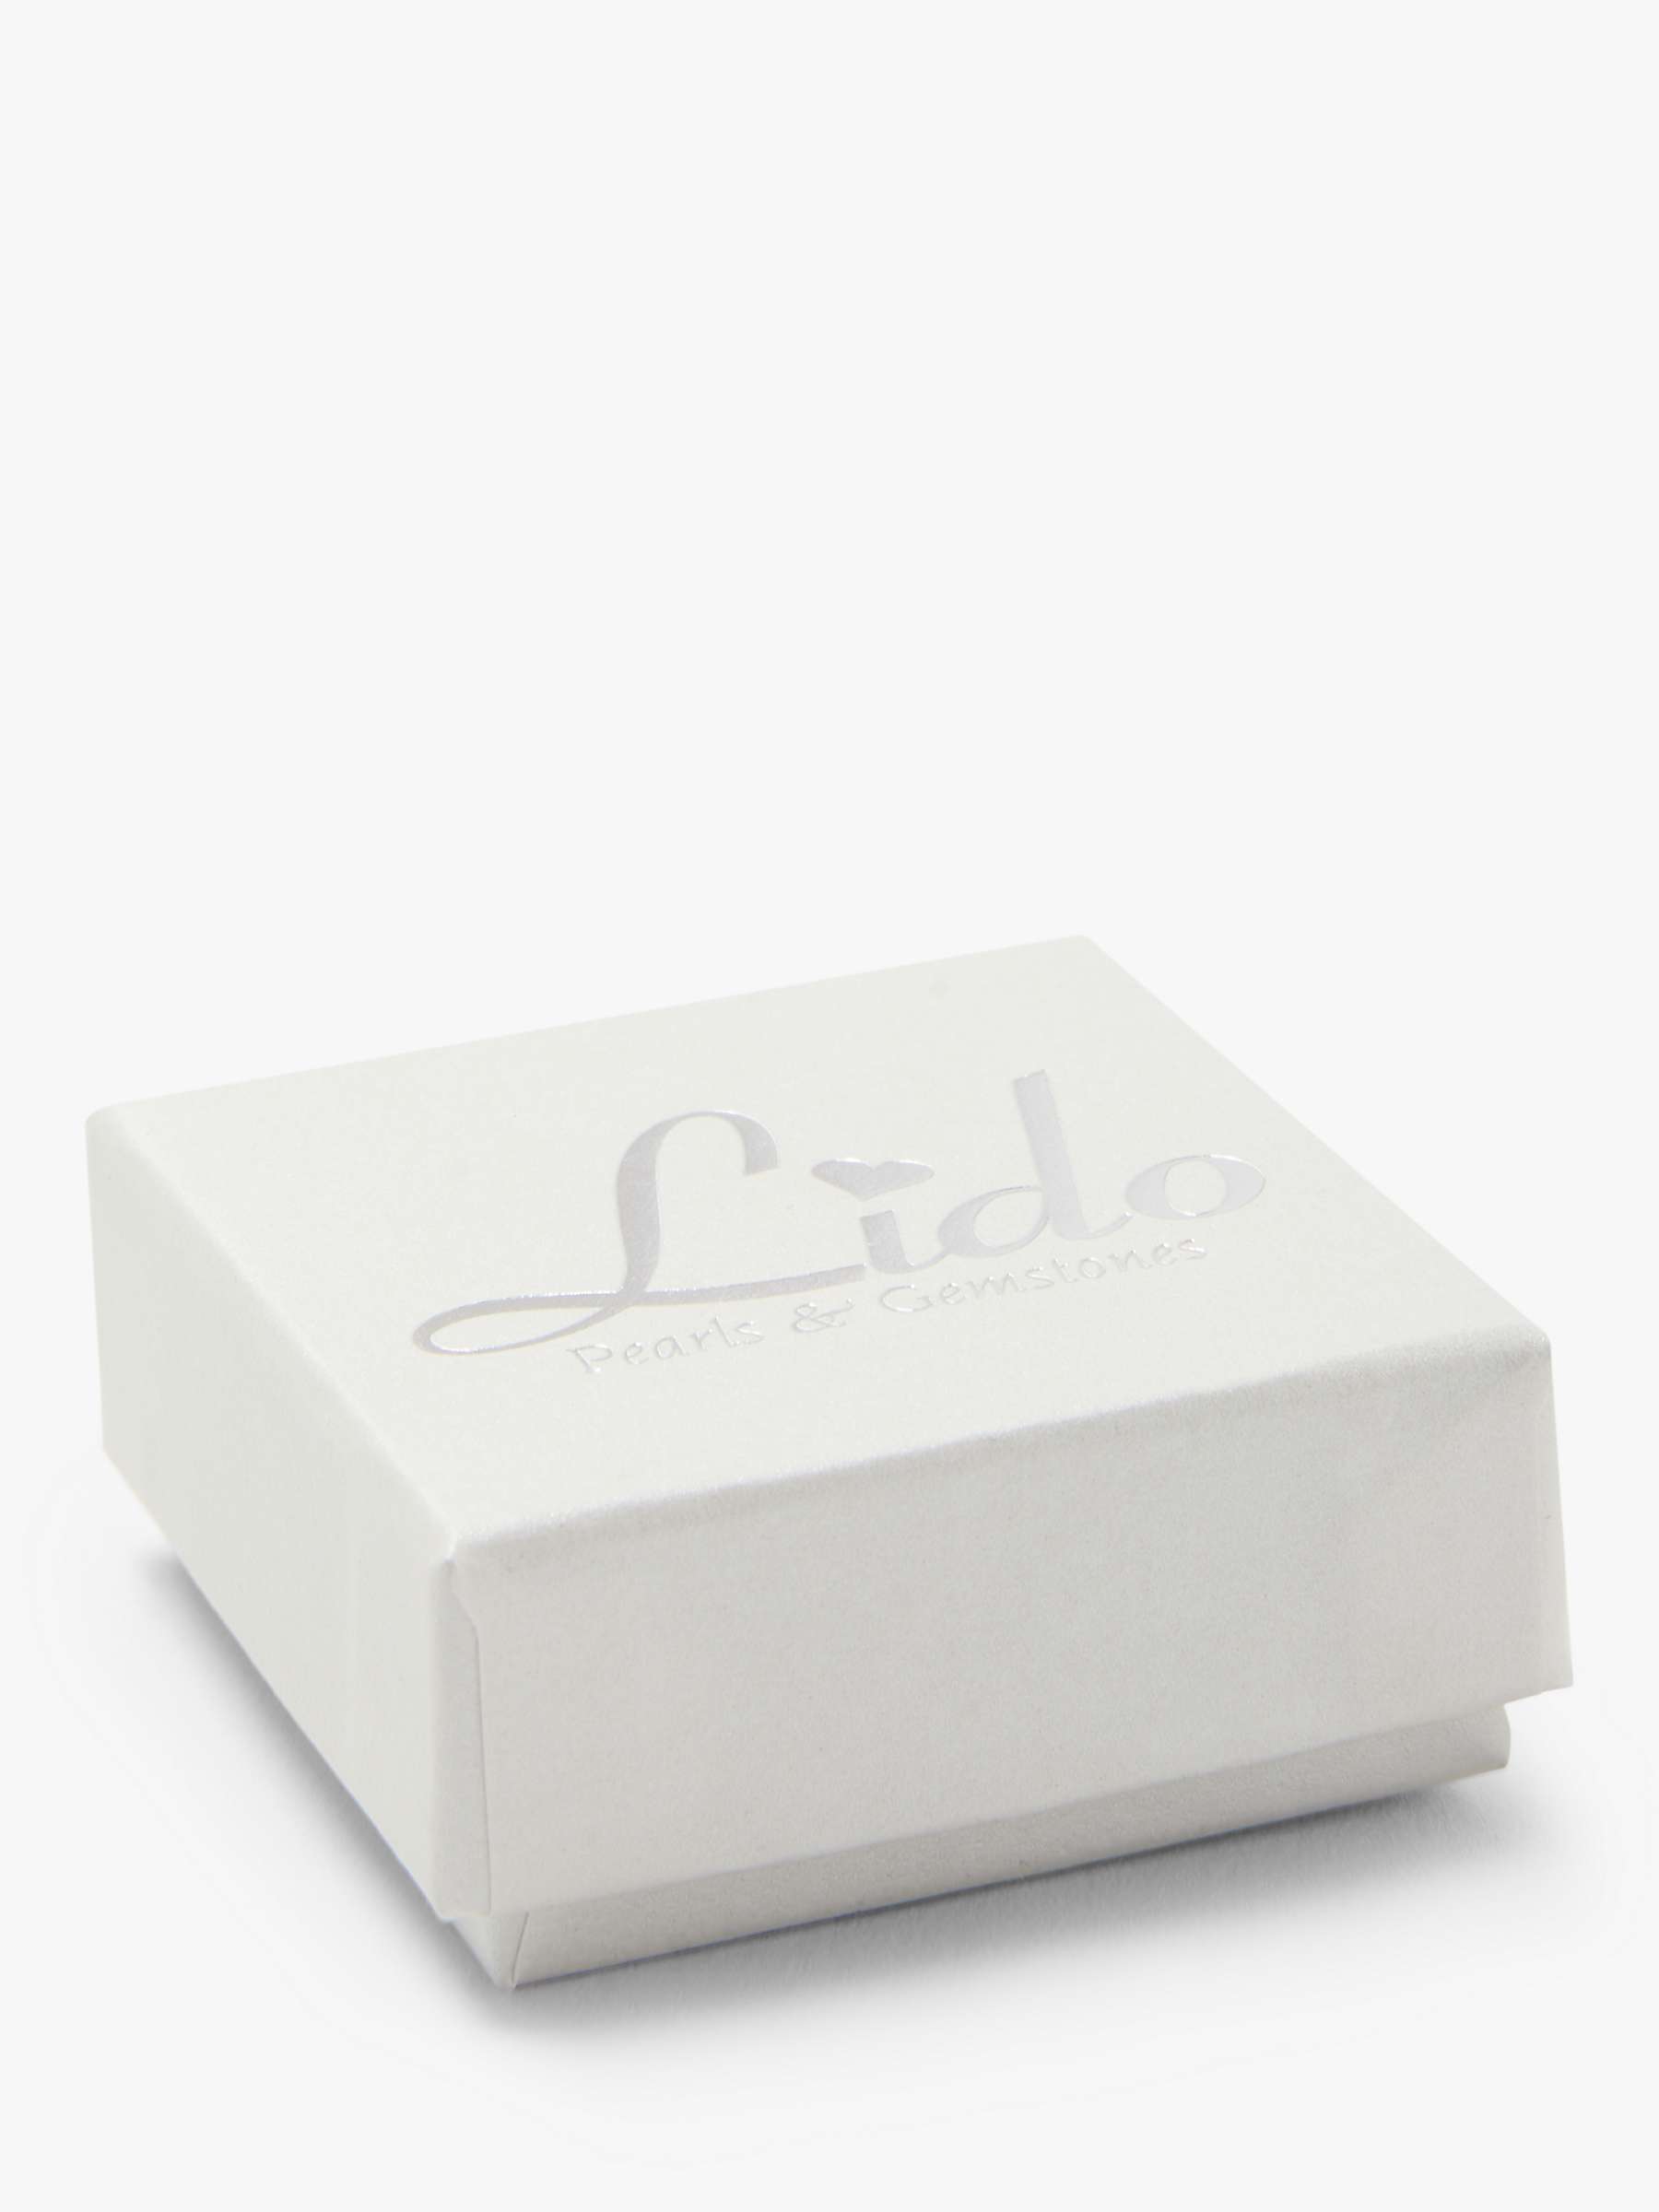 Buy Lido Freshwater Pearl Drop Earrings, Silver/White Online at johnlewis.com